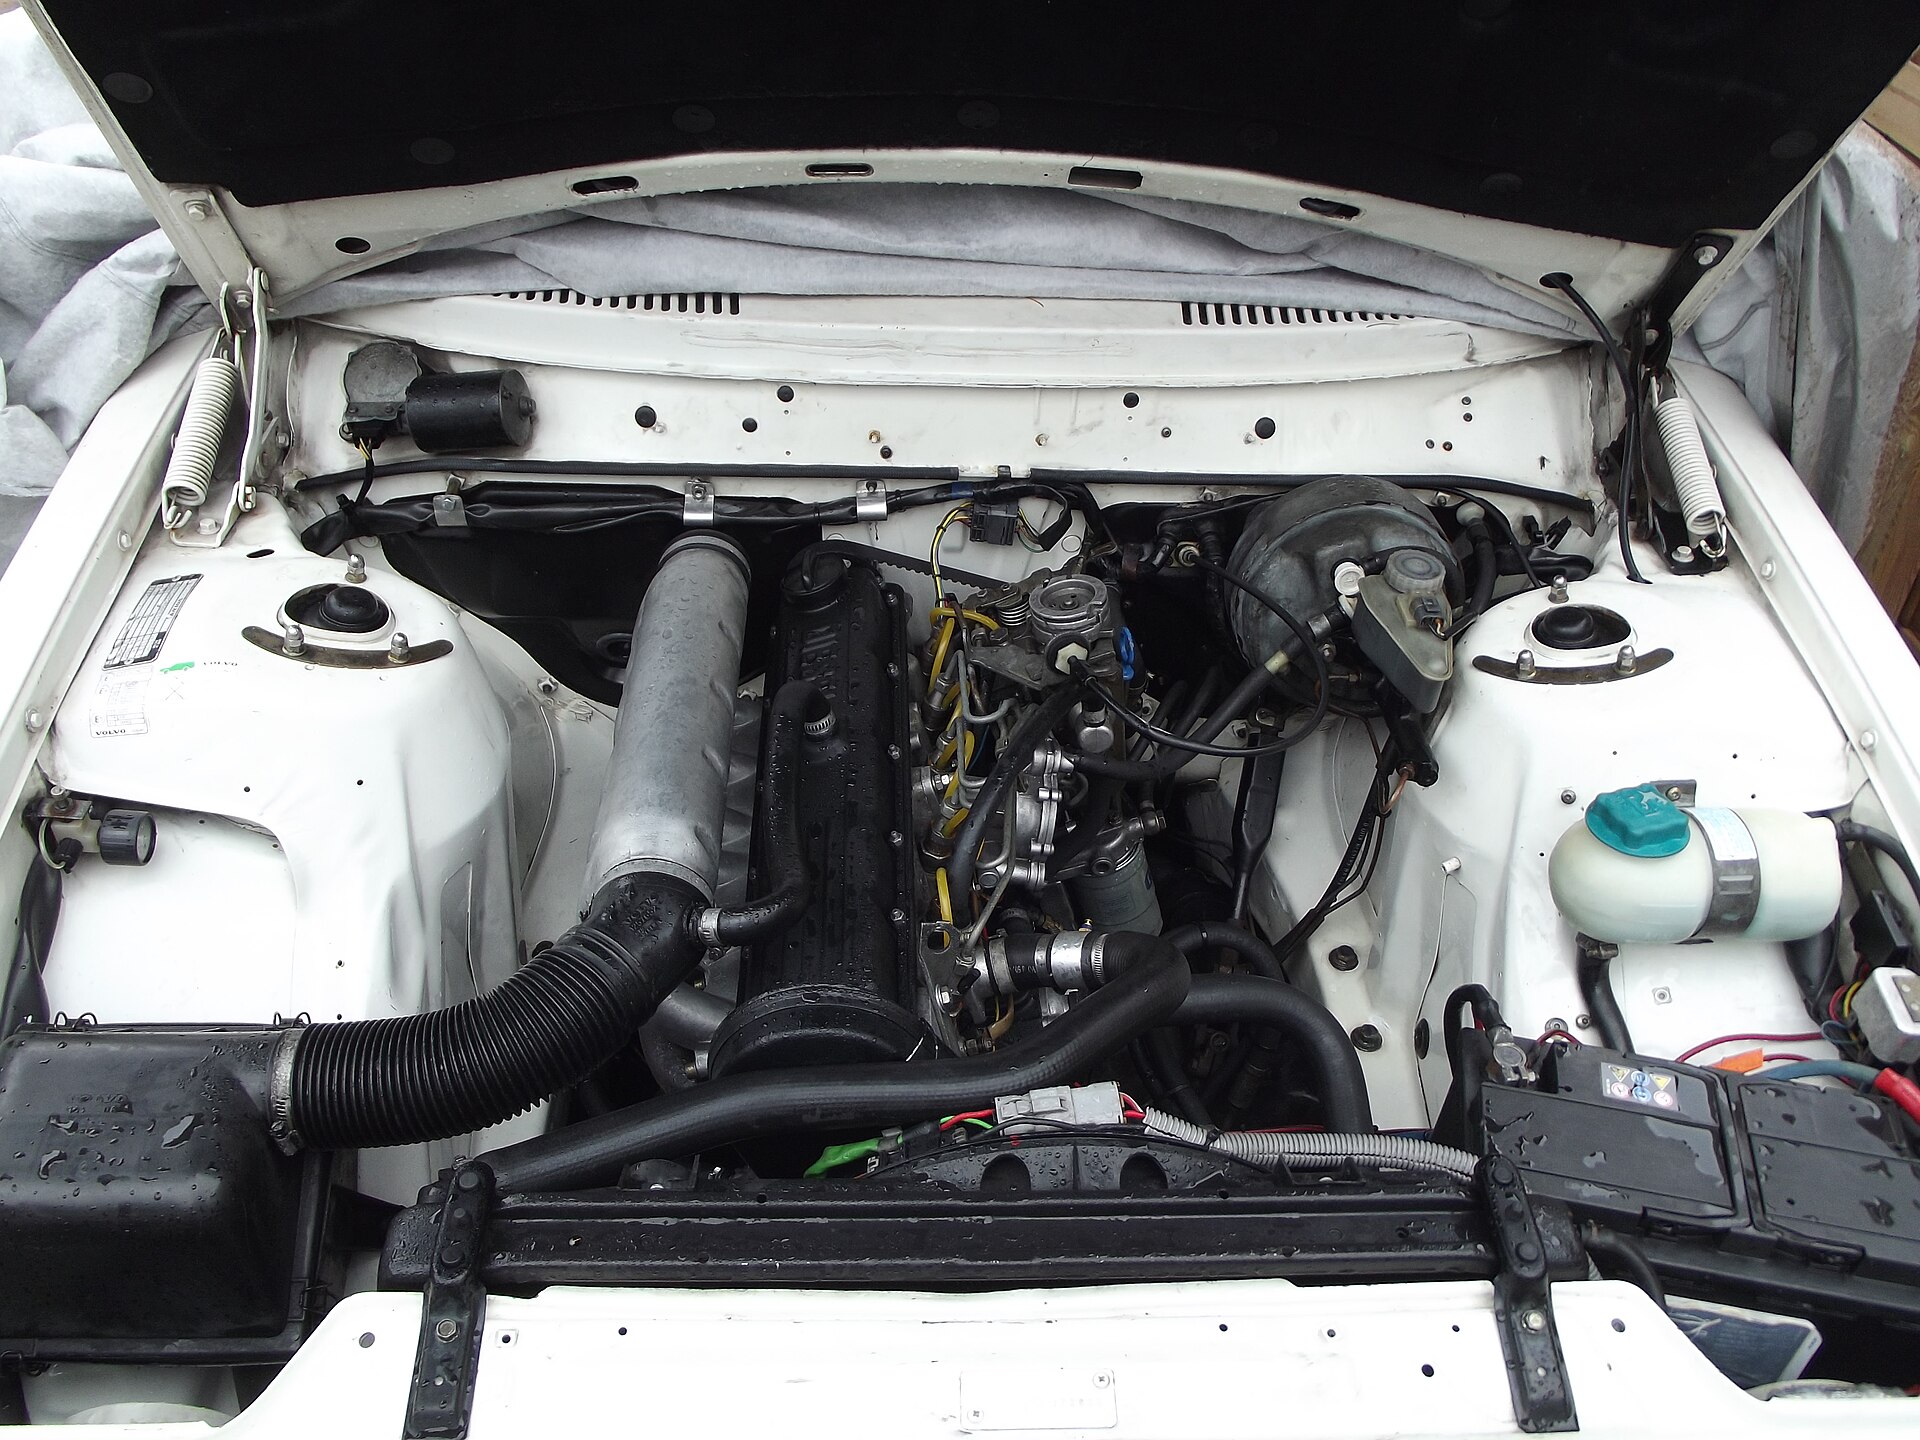 Volkswagen D24 engine - Wikipedia 1991 volvo 240 fuse box 